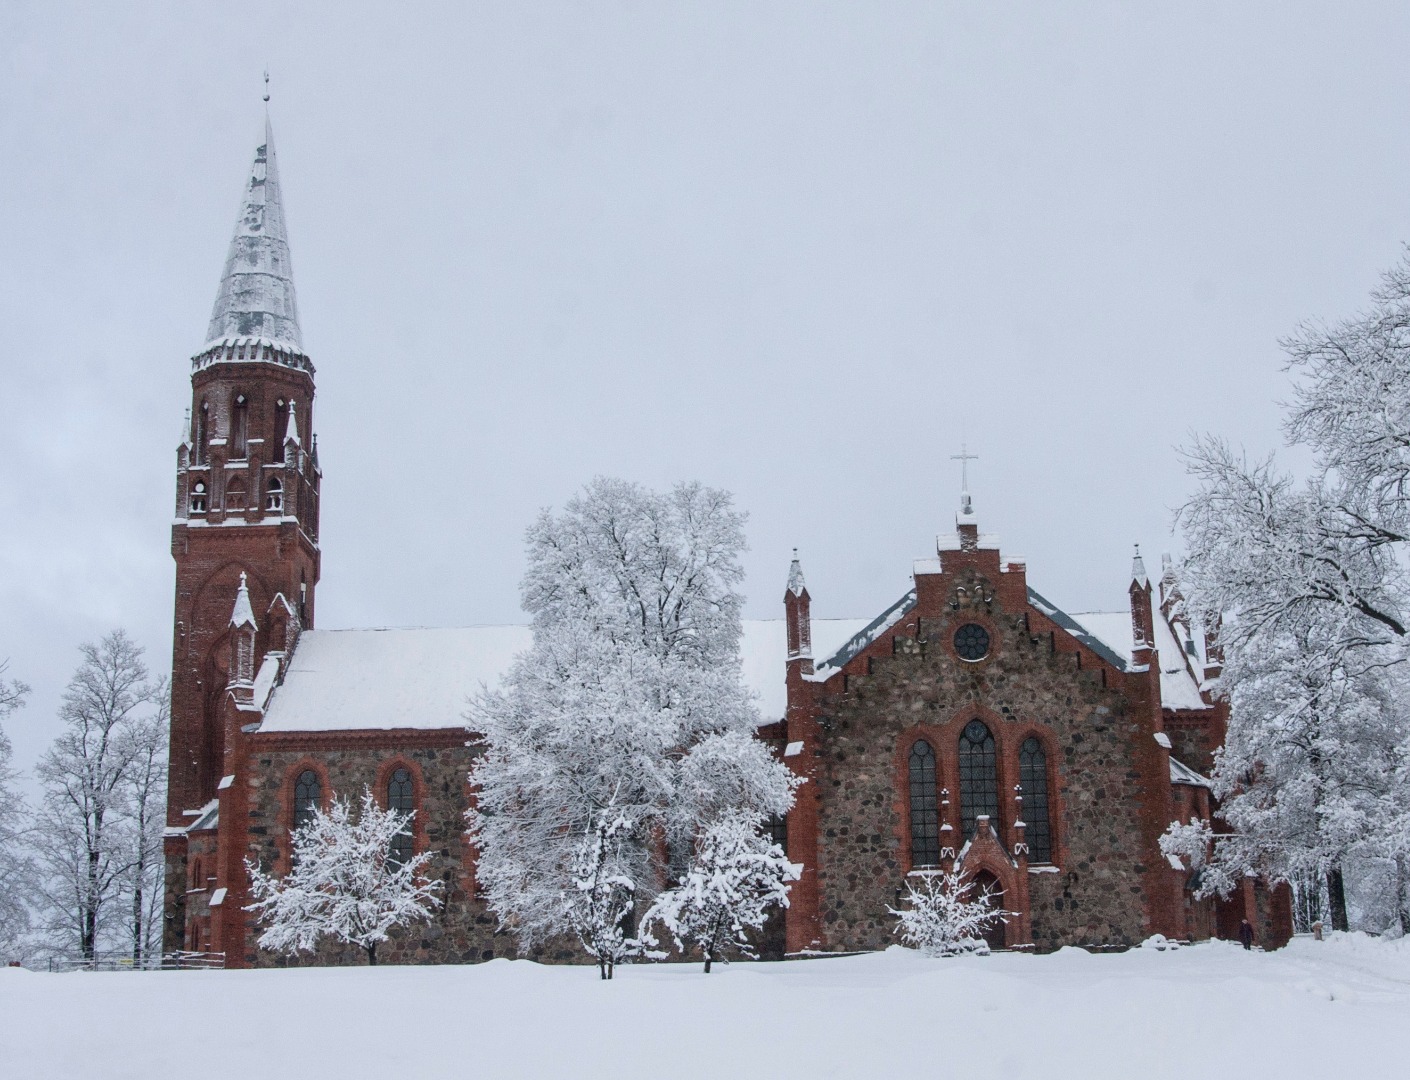 Viljandi Paulus Church rephoto